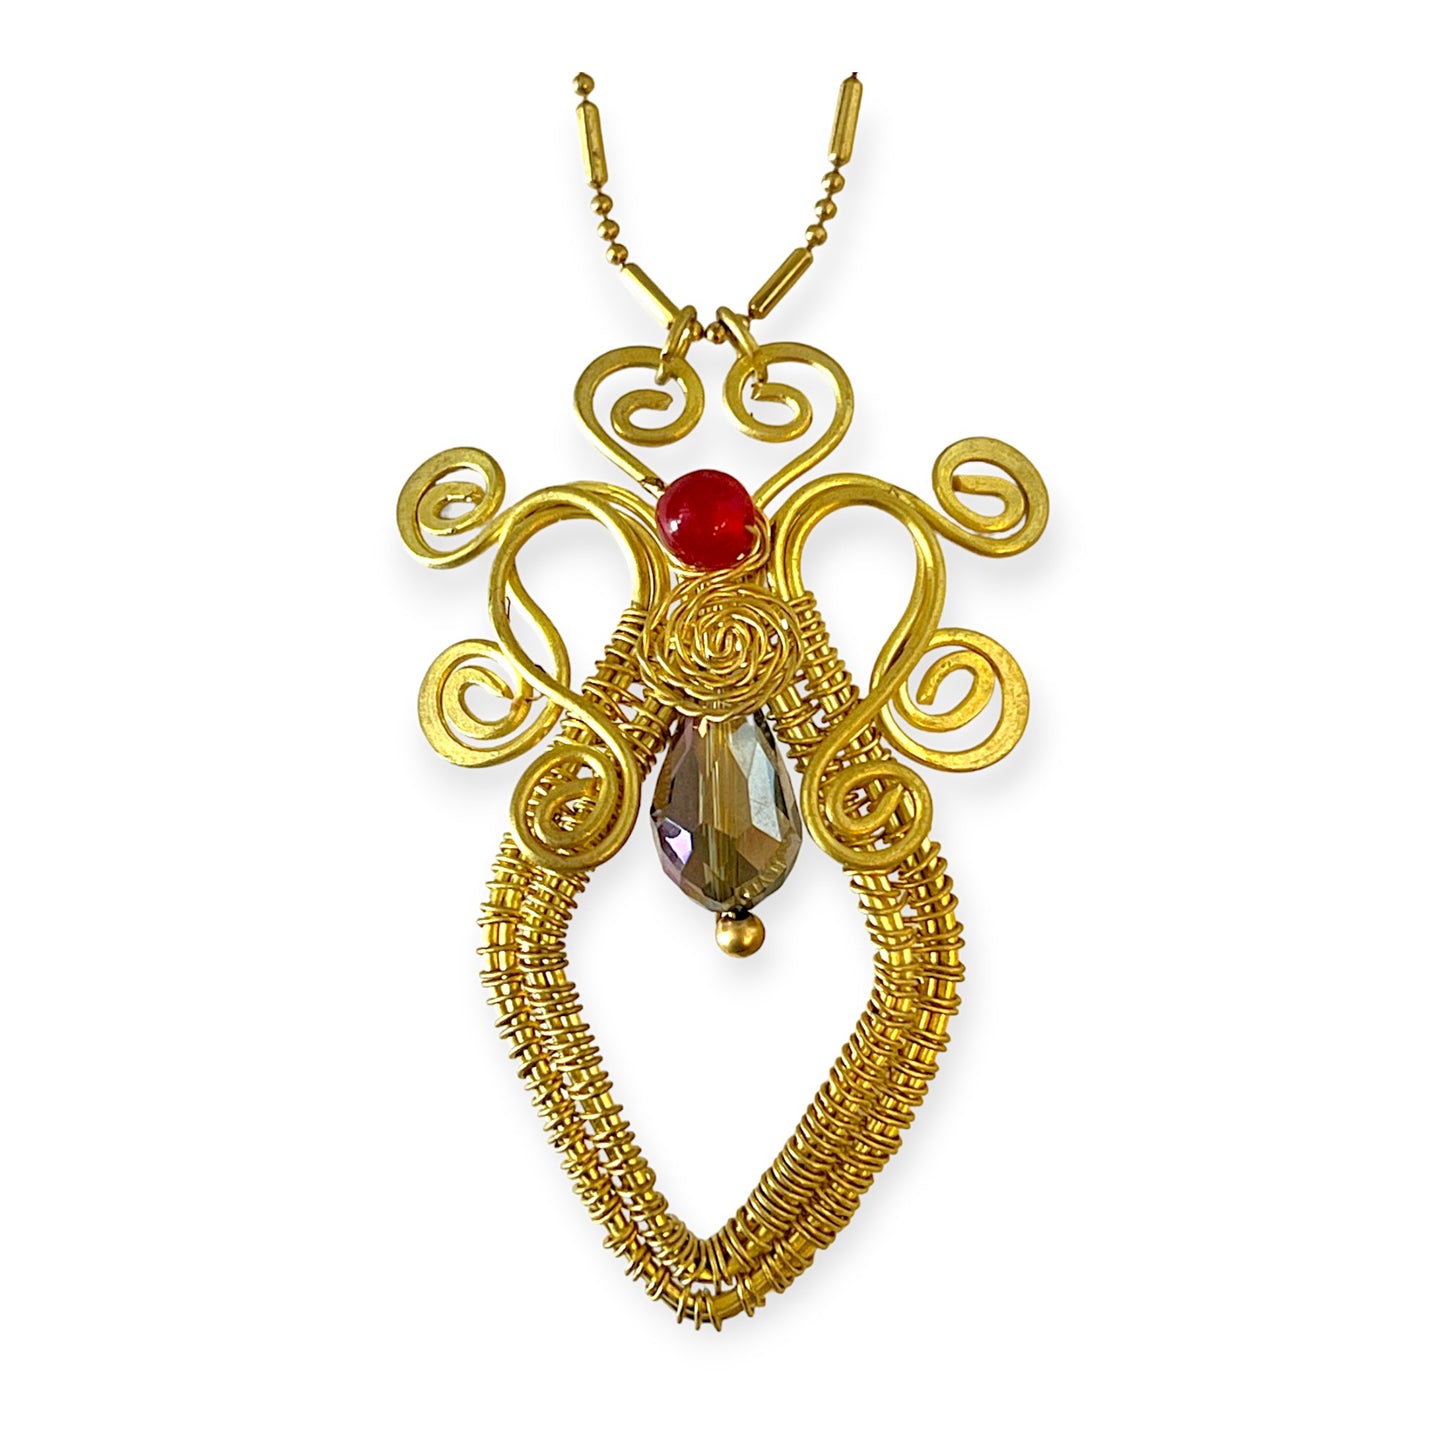 Ornate shield pendant necklace - Sundara Joon